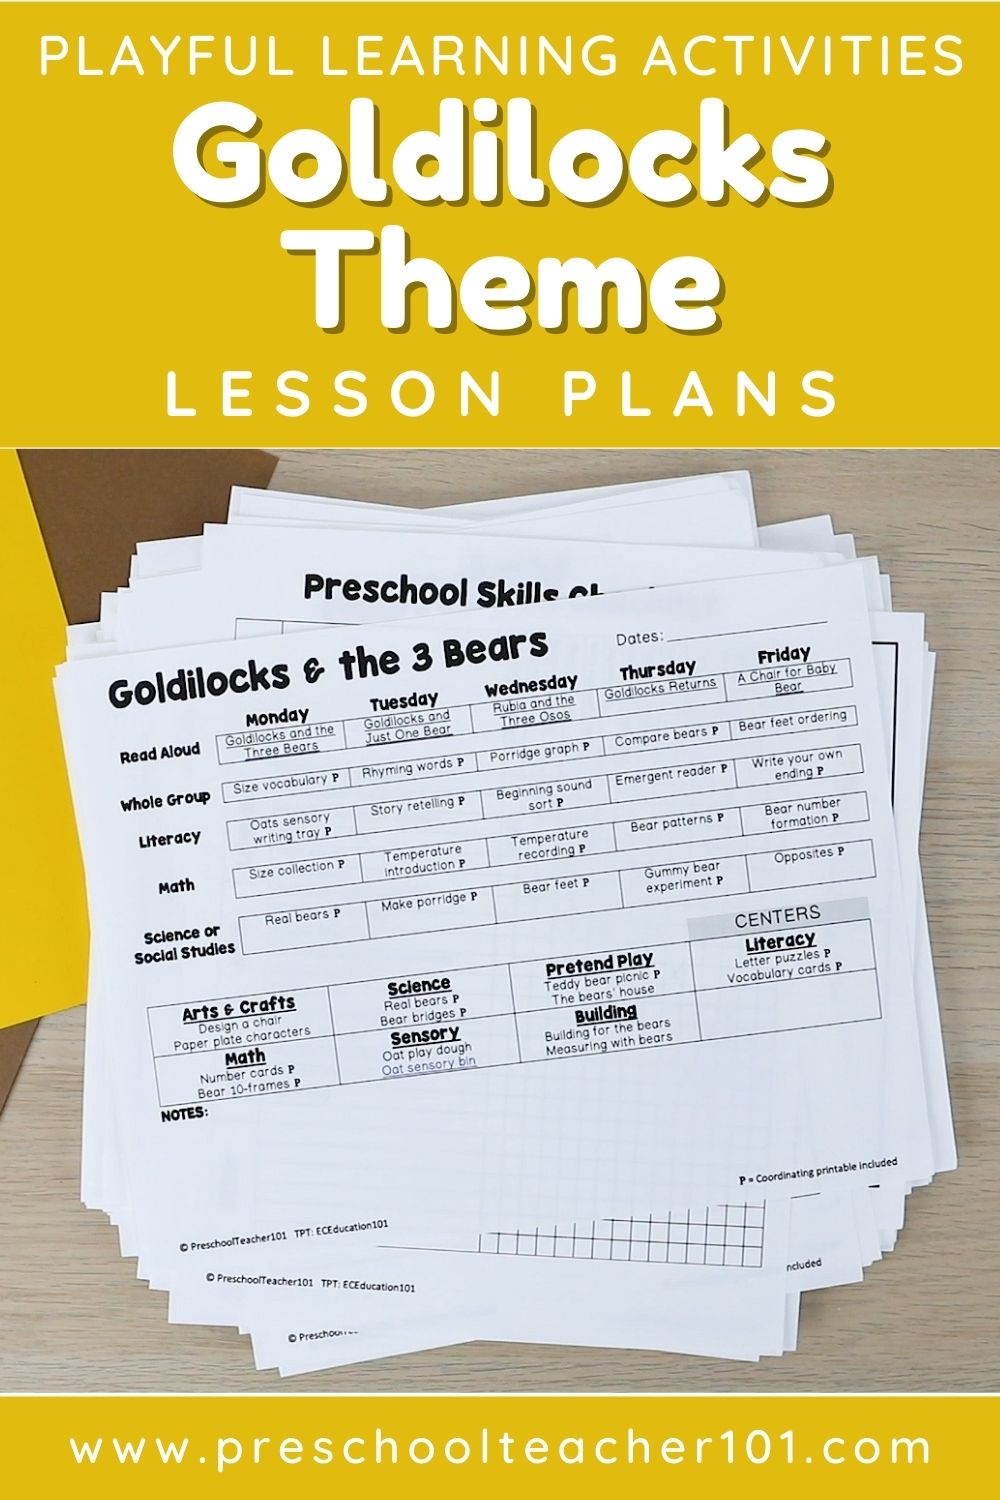 Goldilocks Theme Lesson Plans